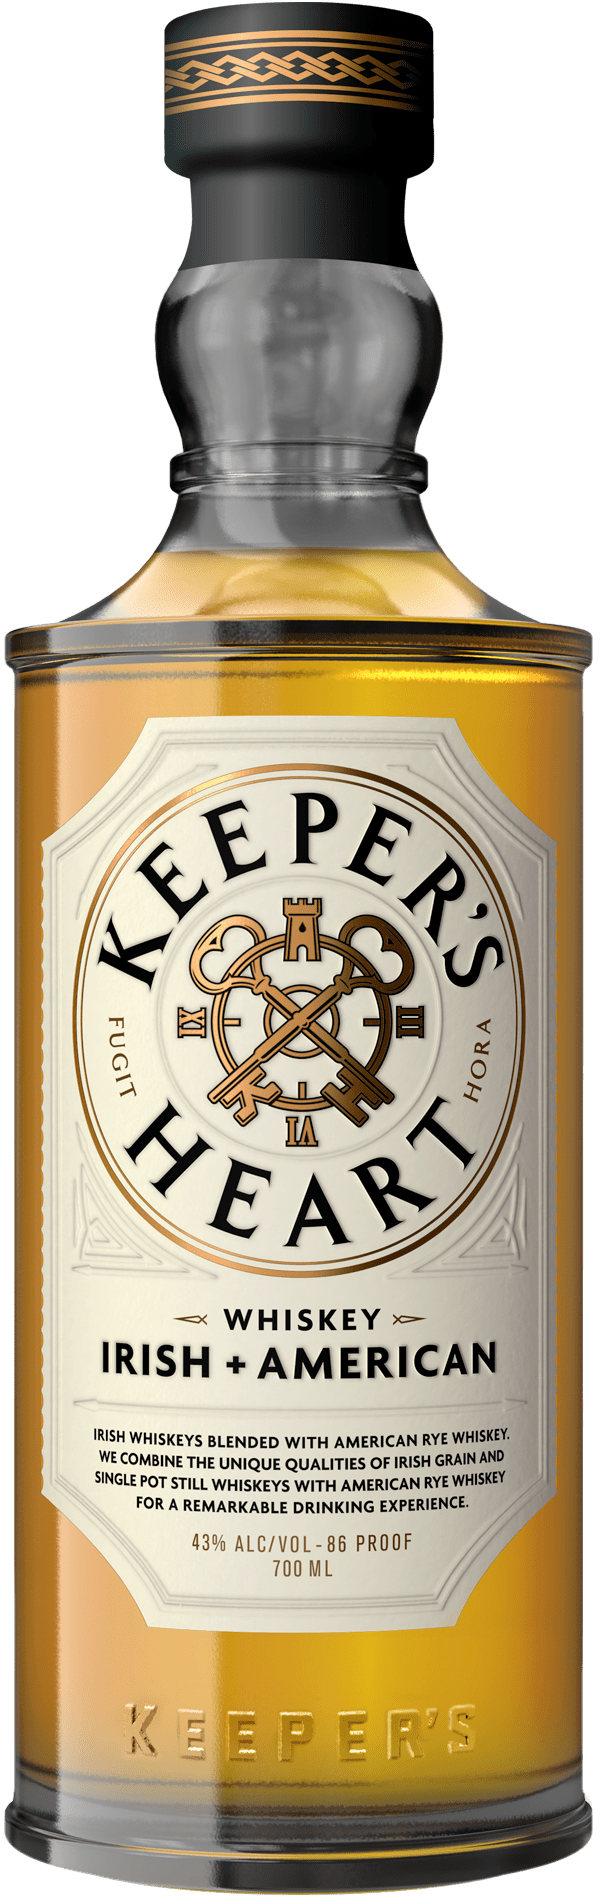 Keeper's Heart Irish + American Whiskey bottle